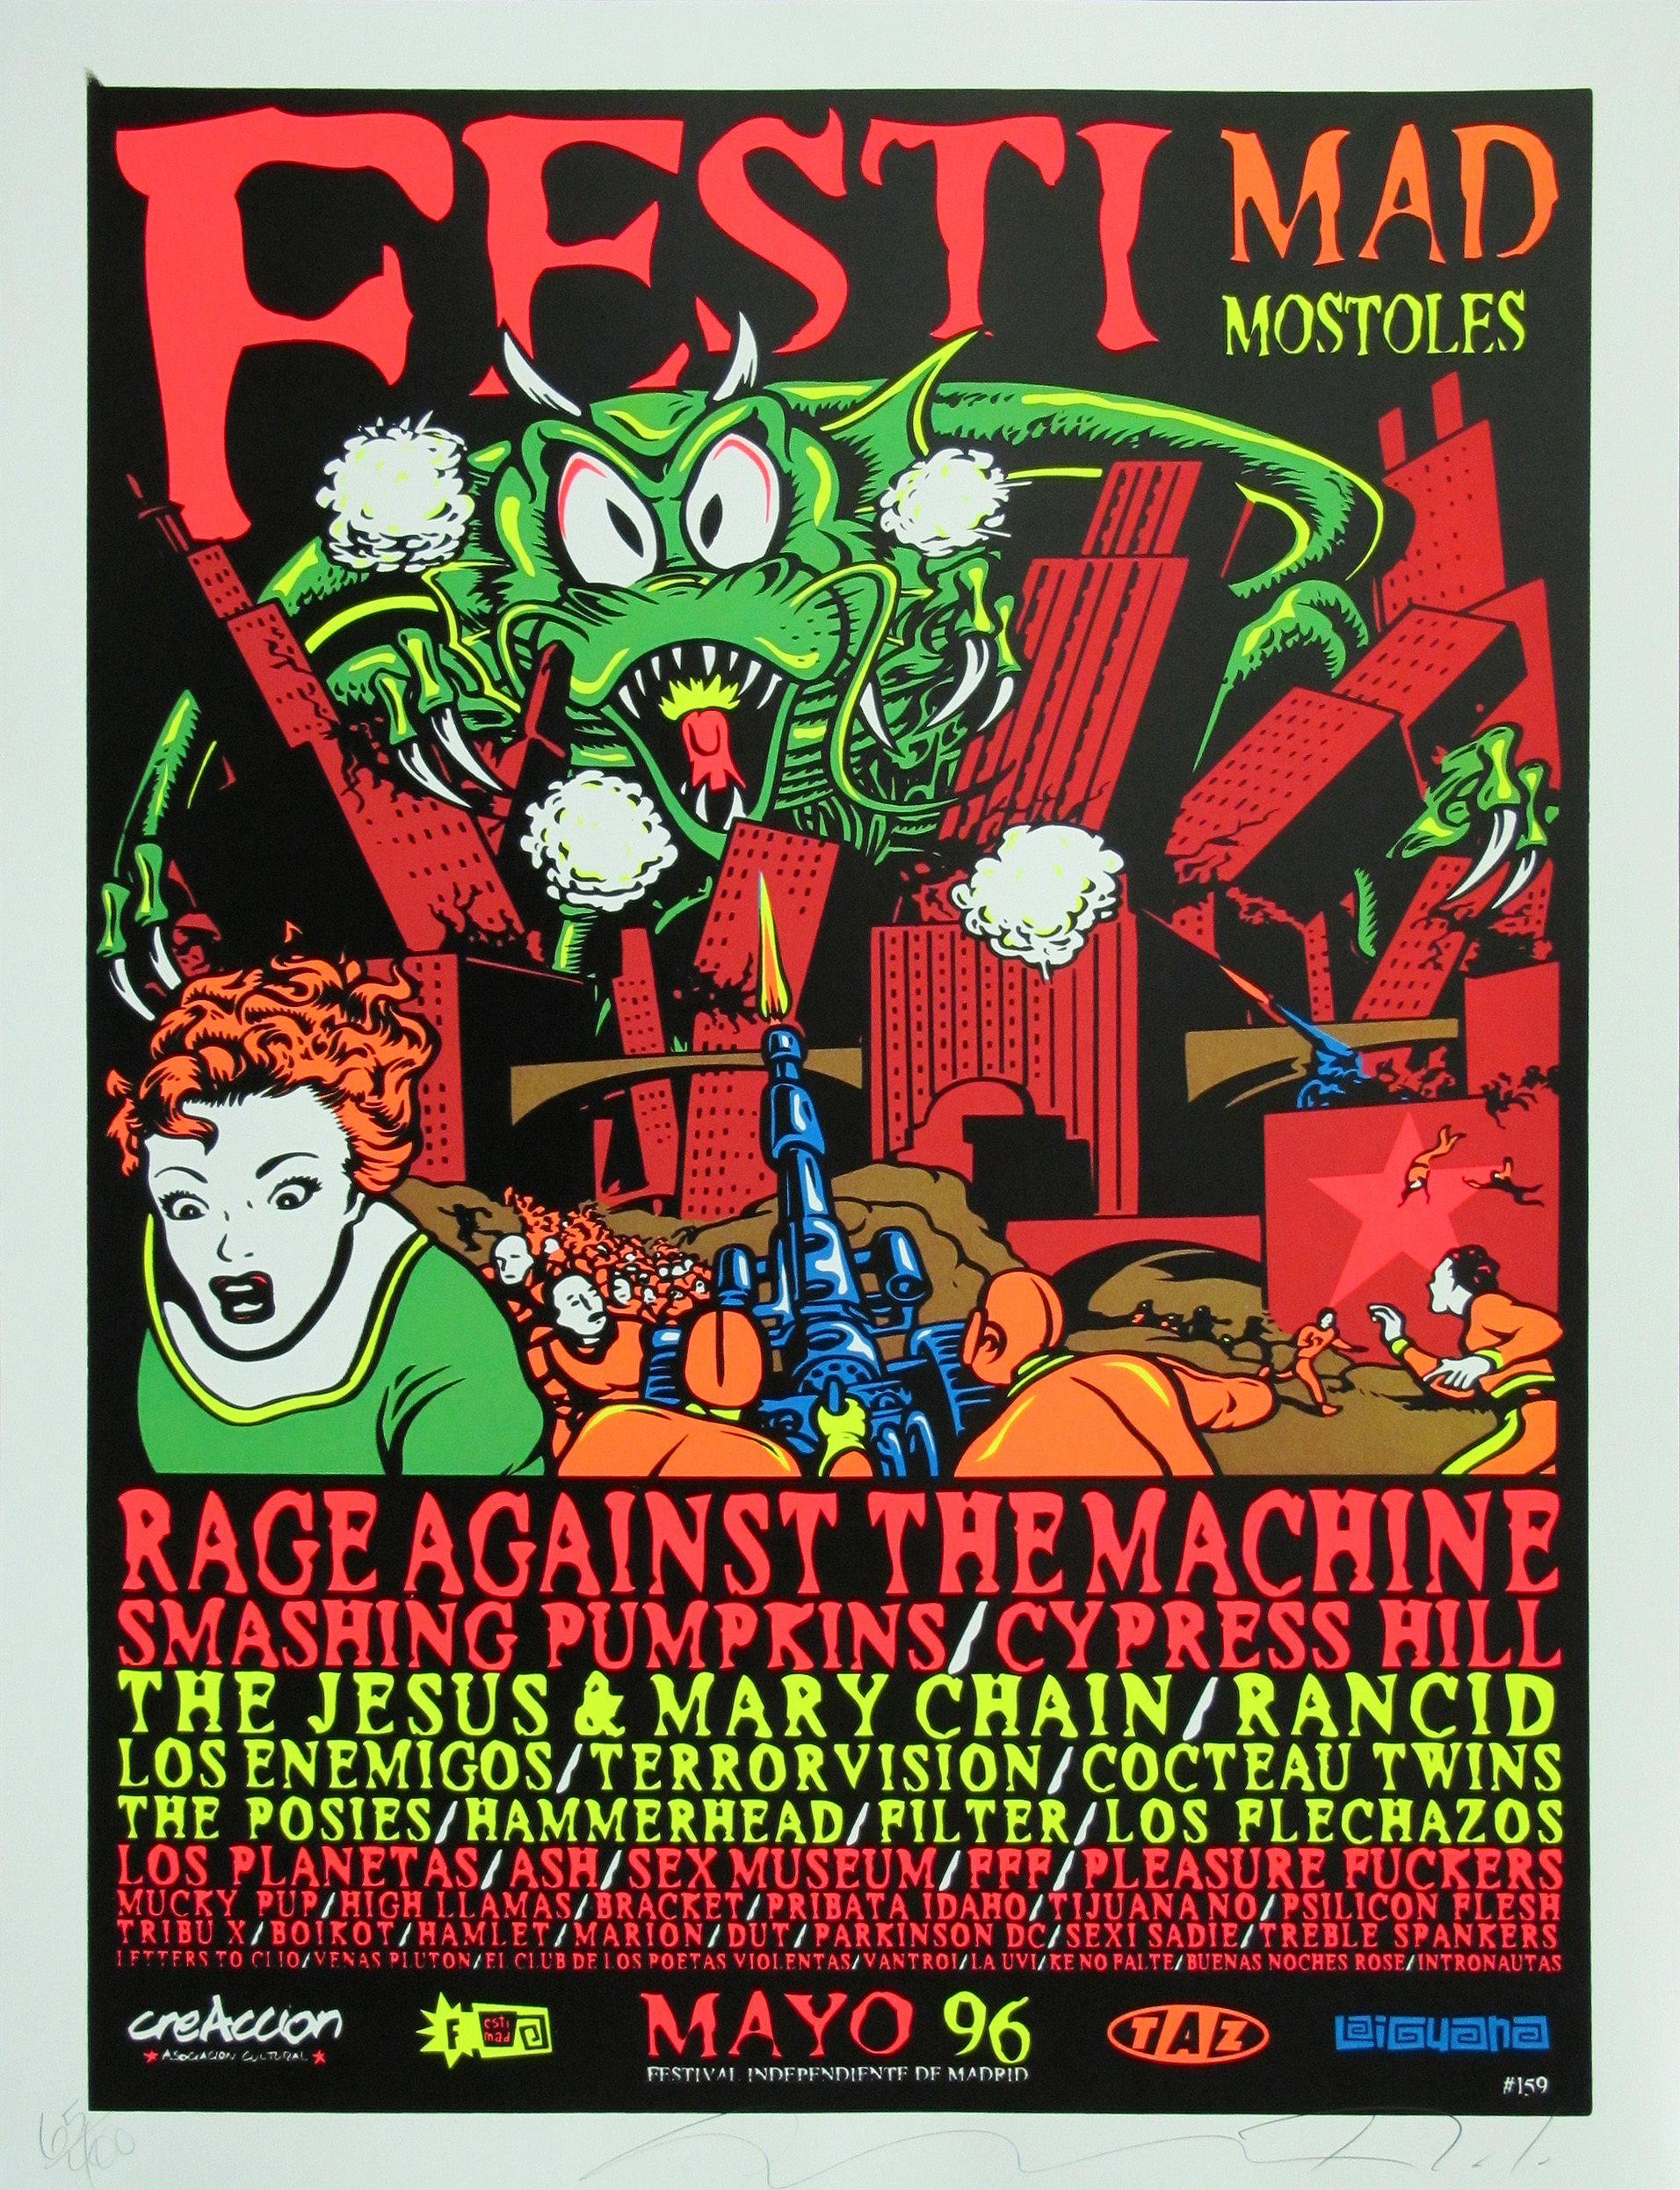 Festi Mad Mostoles (Festival Madrid) Concert Poster